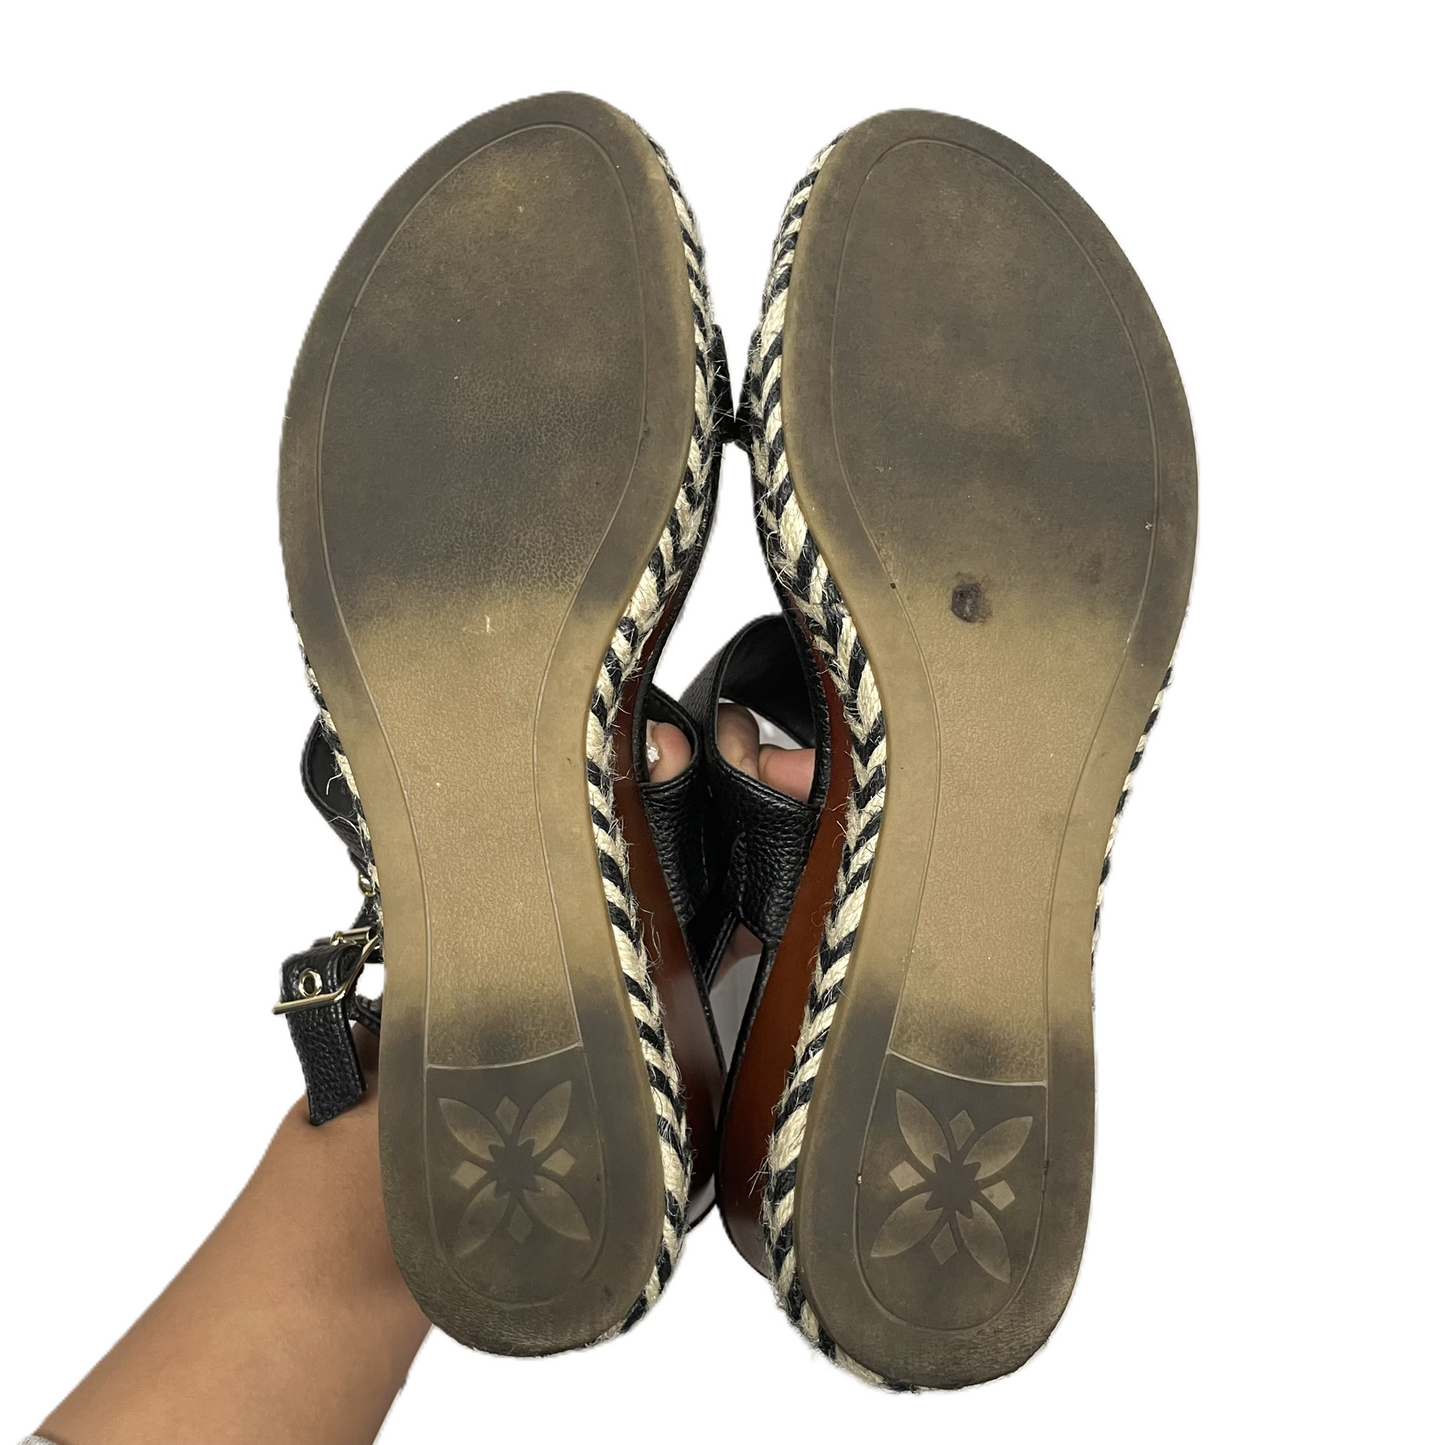 Sandals Heels Platform By Bcbgeneration  Size: 8.5